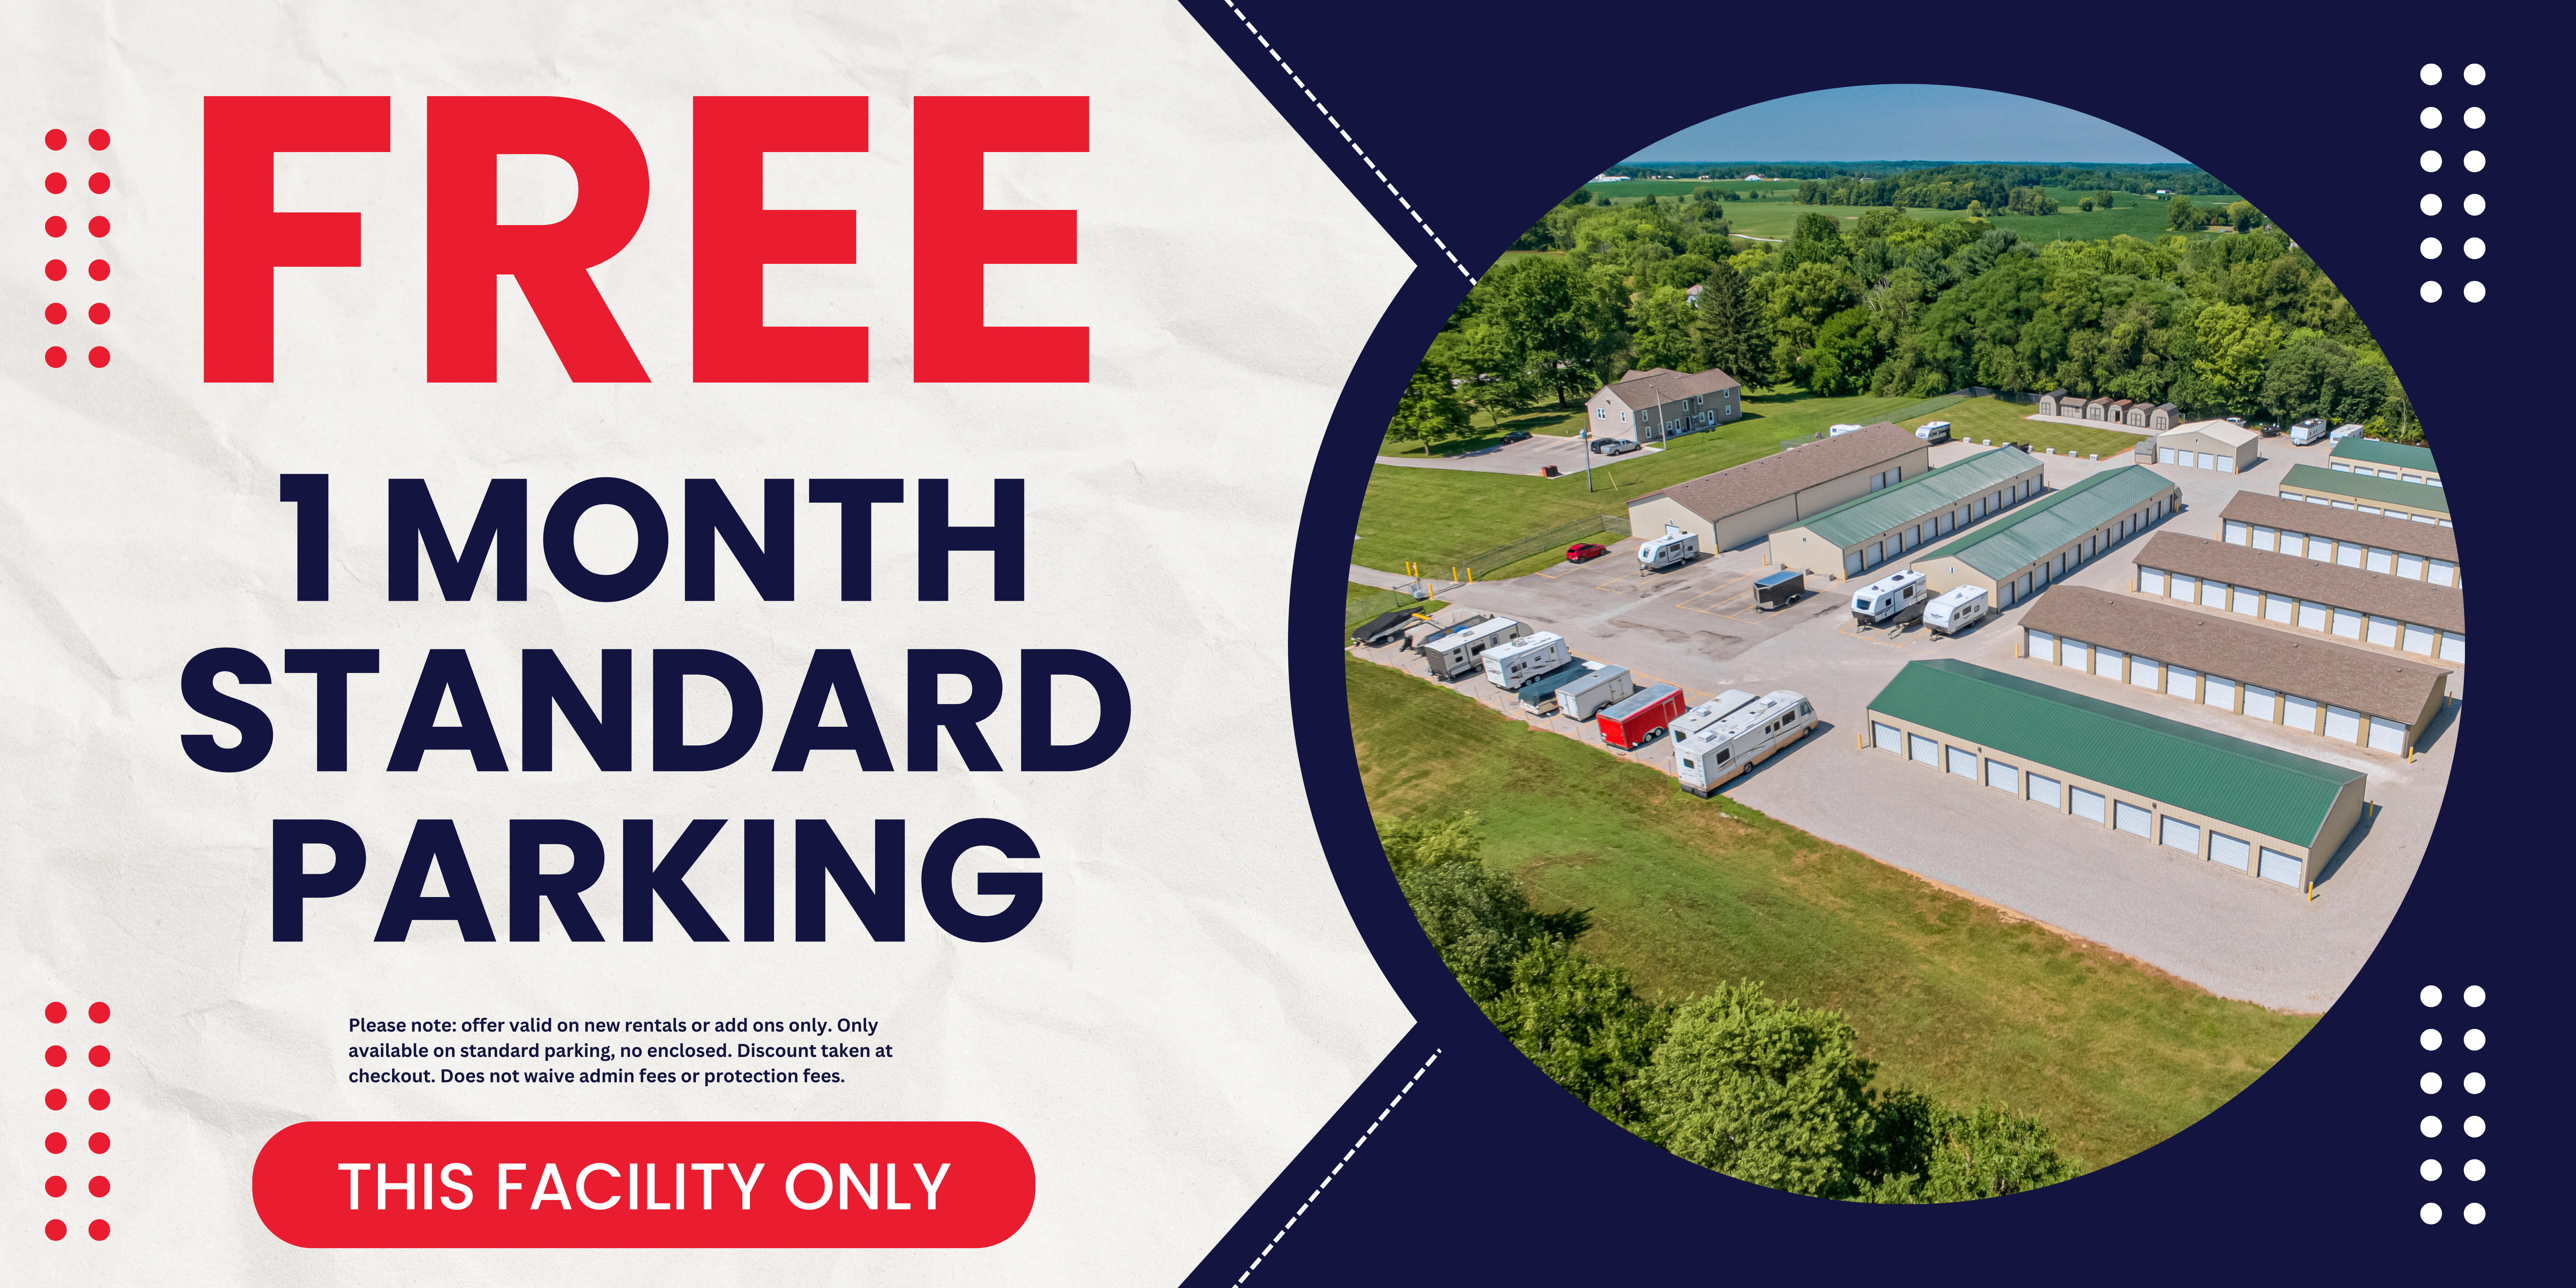 1 month standard parking free 2238